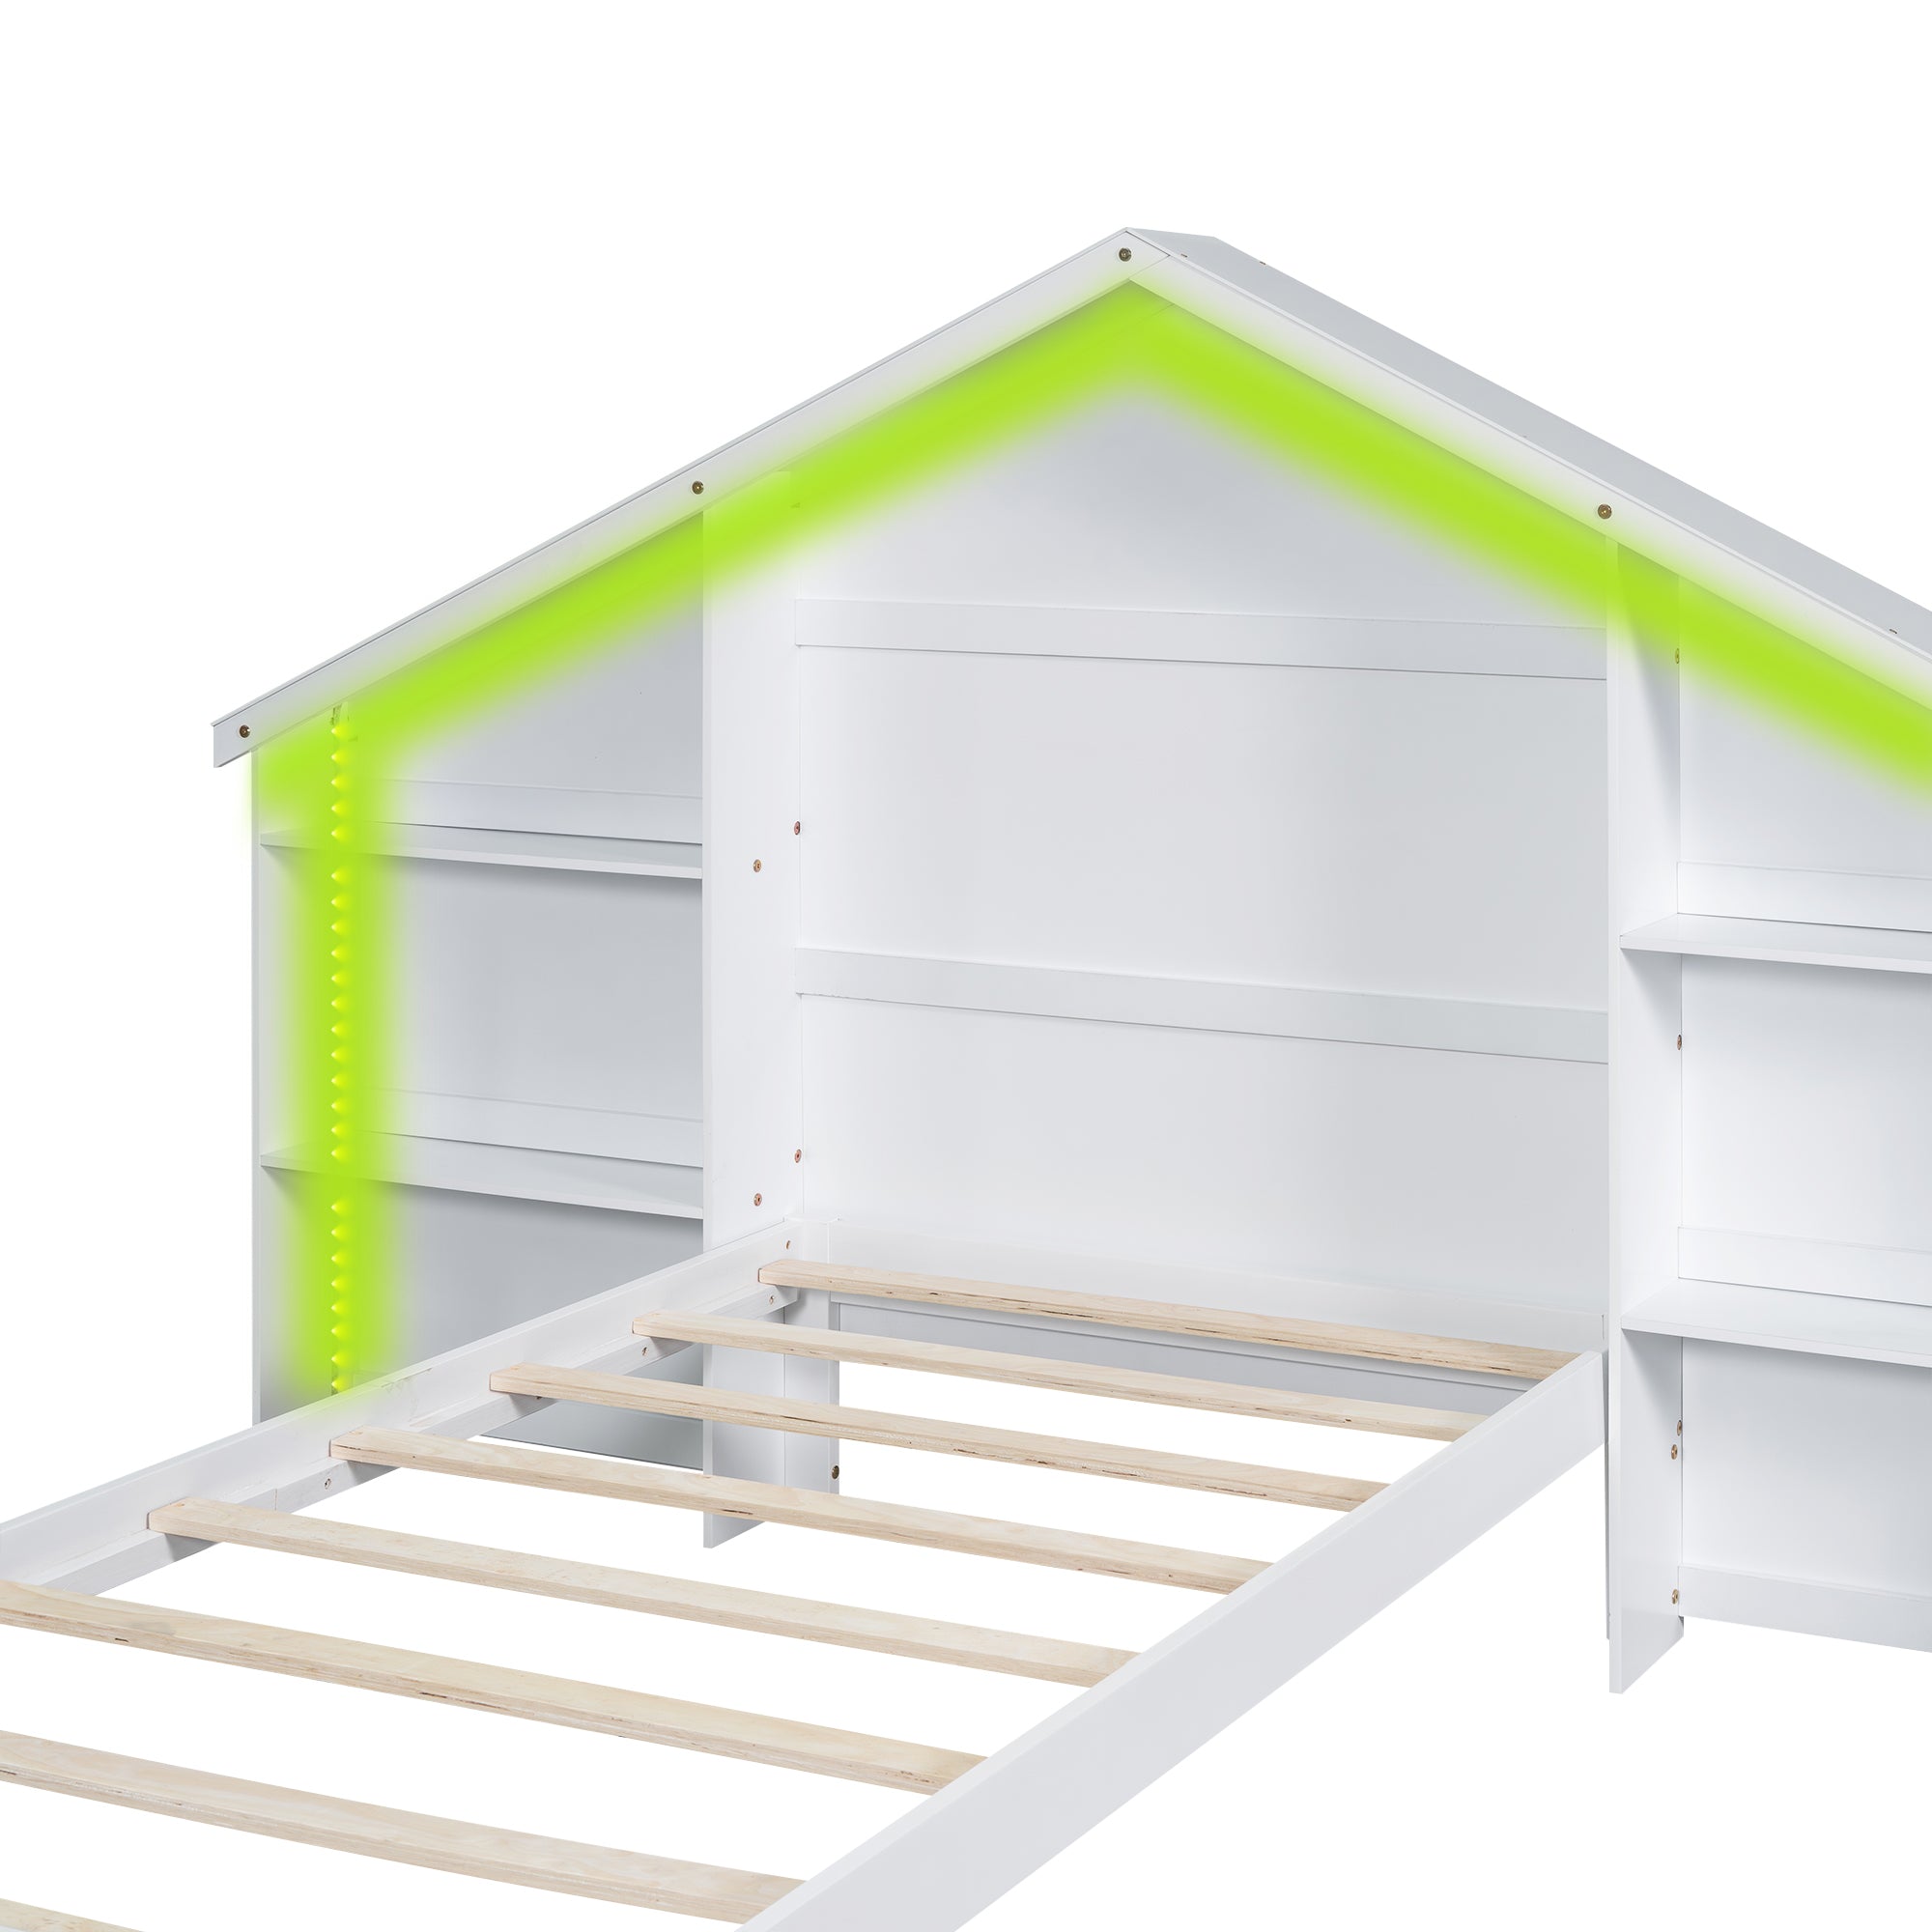 Bellemave® Wood Platform Bed with House-shaped Storage Headboard and Built-in LED Bellemave®